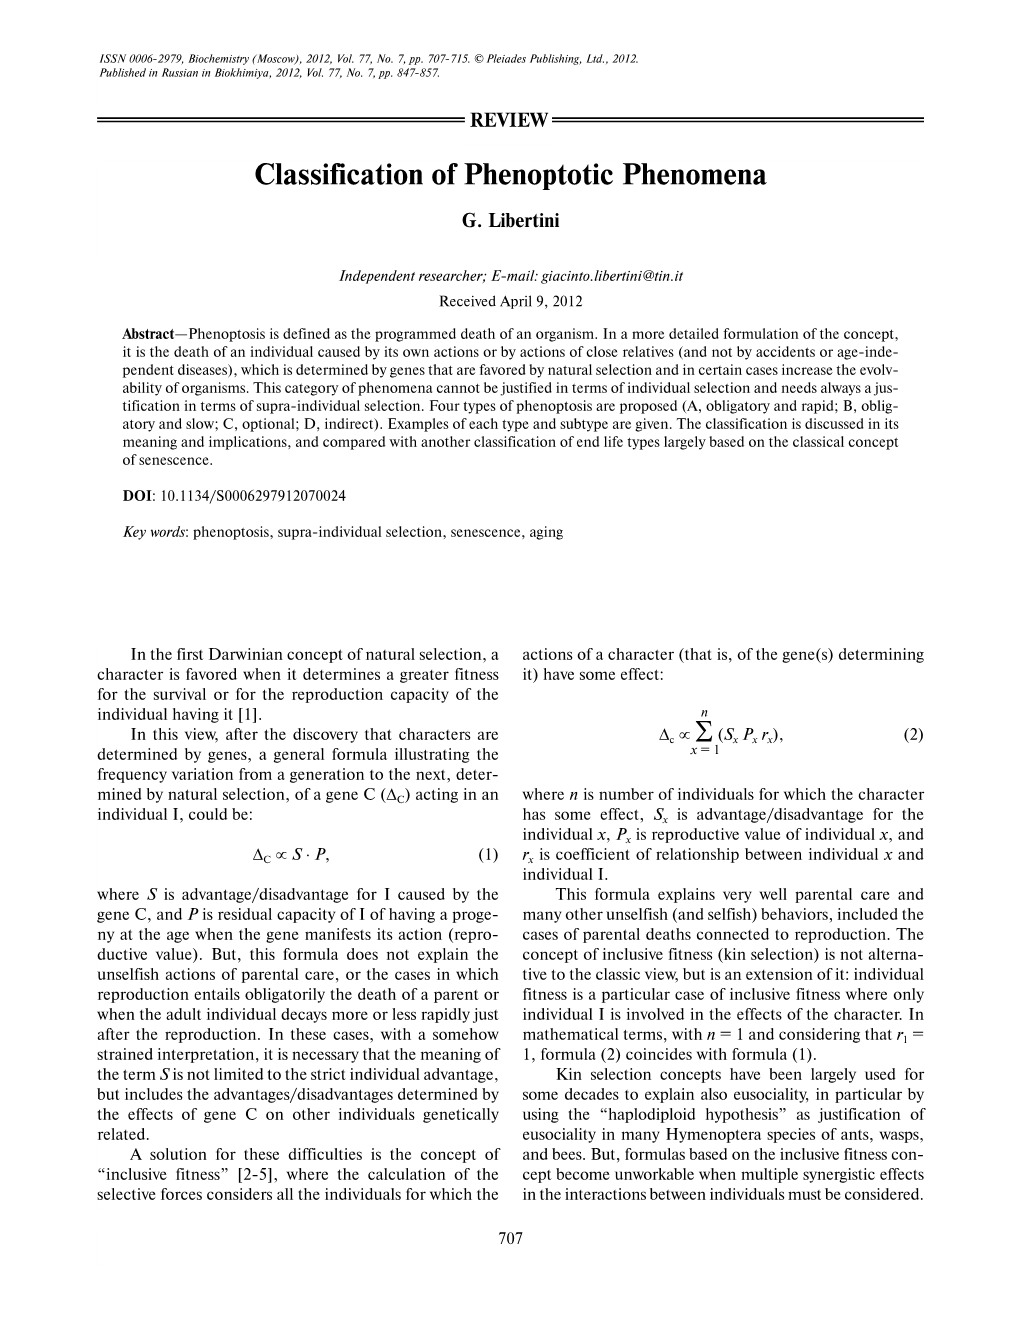 Classification of Phenoptotic Phenomena